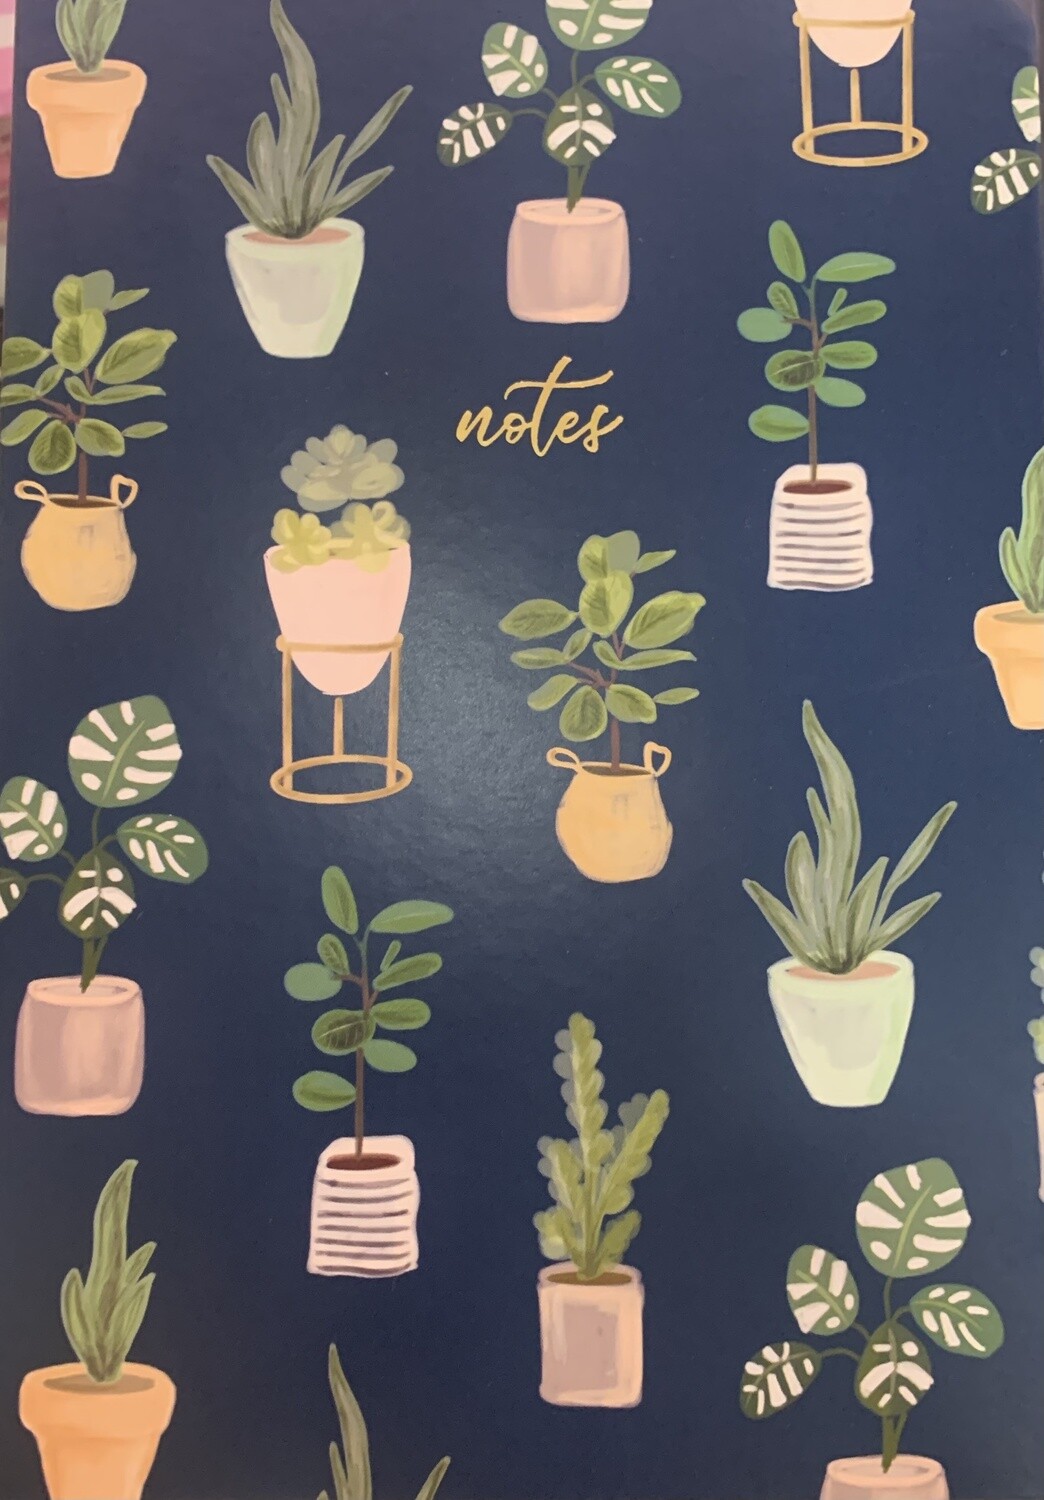 House Plants Journal